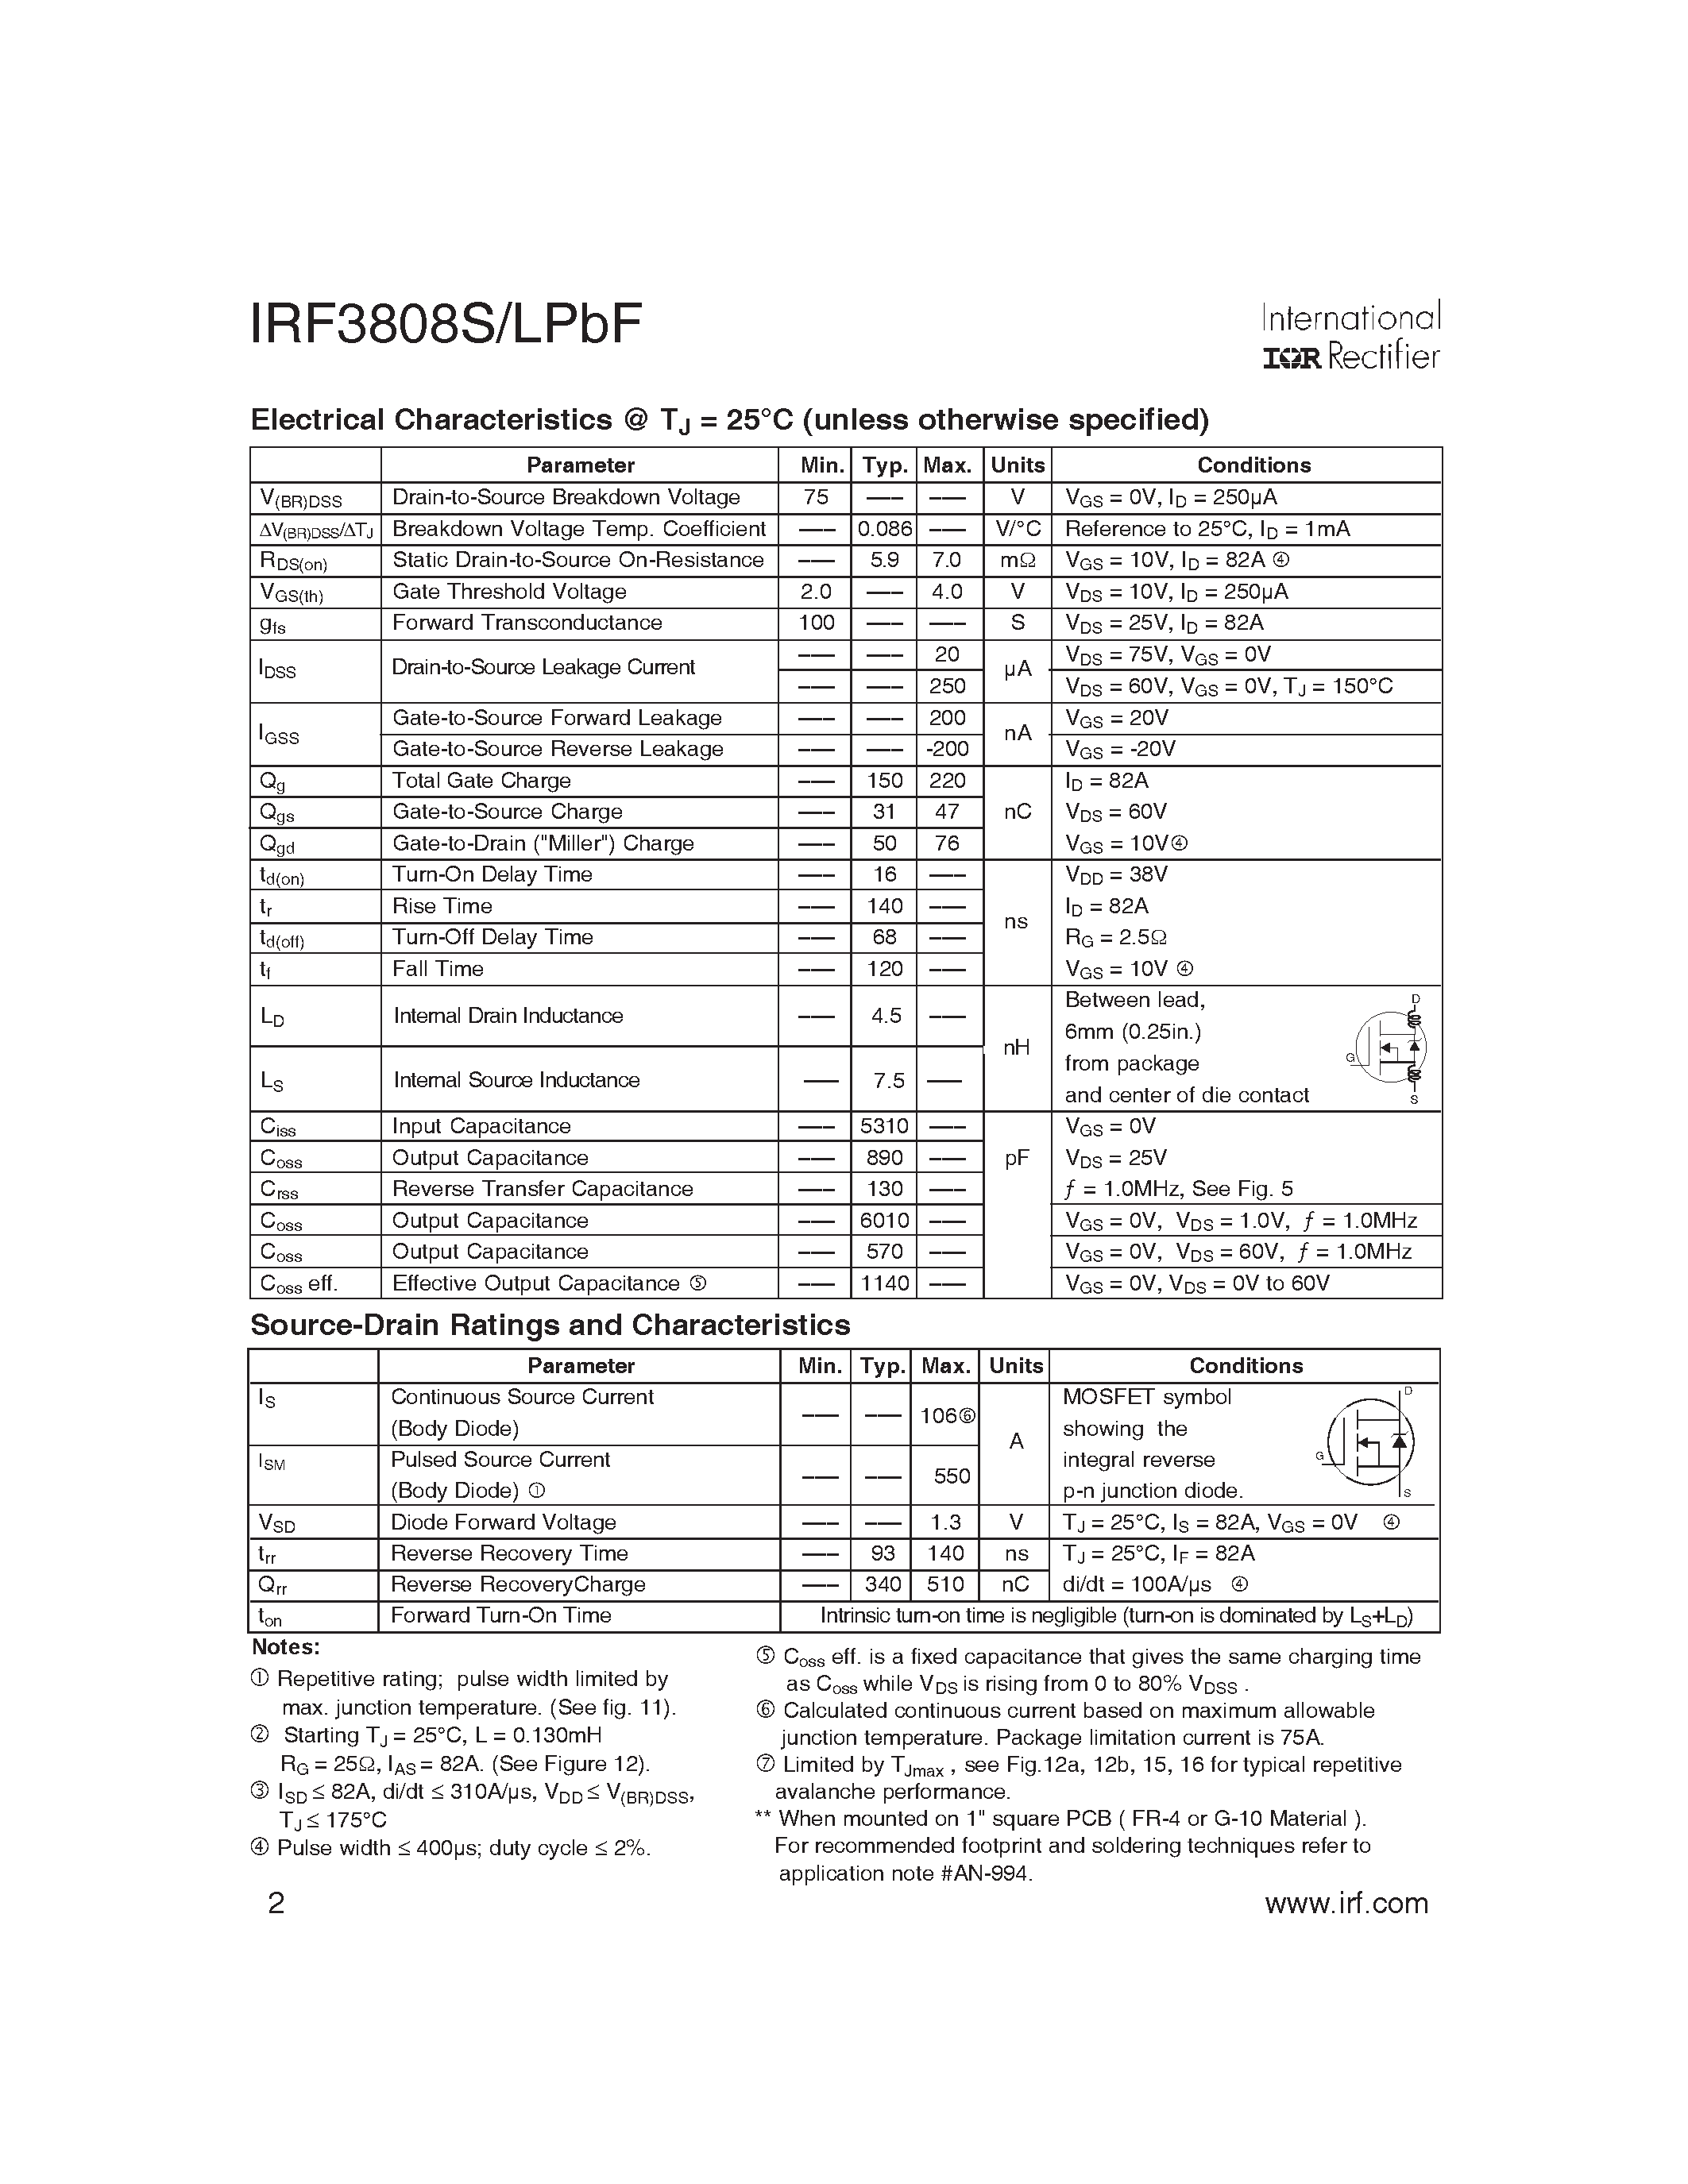 Даташит IRF3808LPBF - (IRF3808SPBF / IRF3808LPBF) AUTOMOTIVE MOSFET страница 2